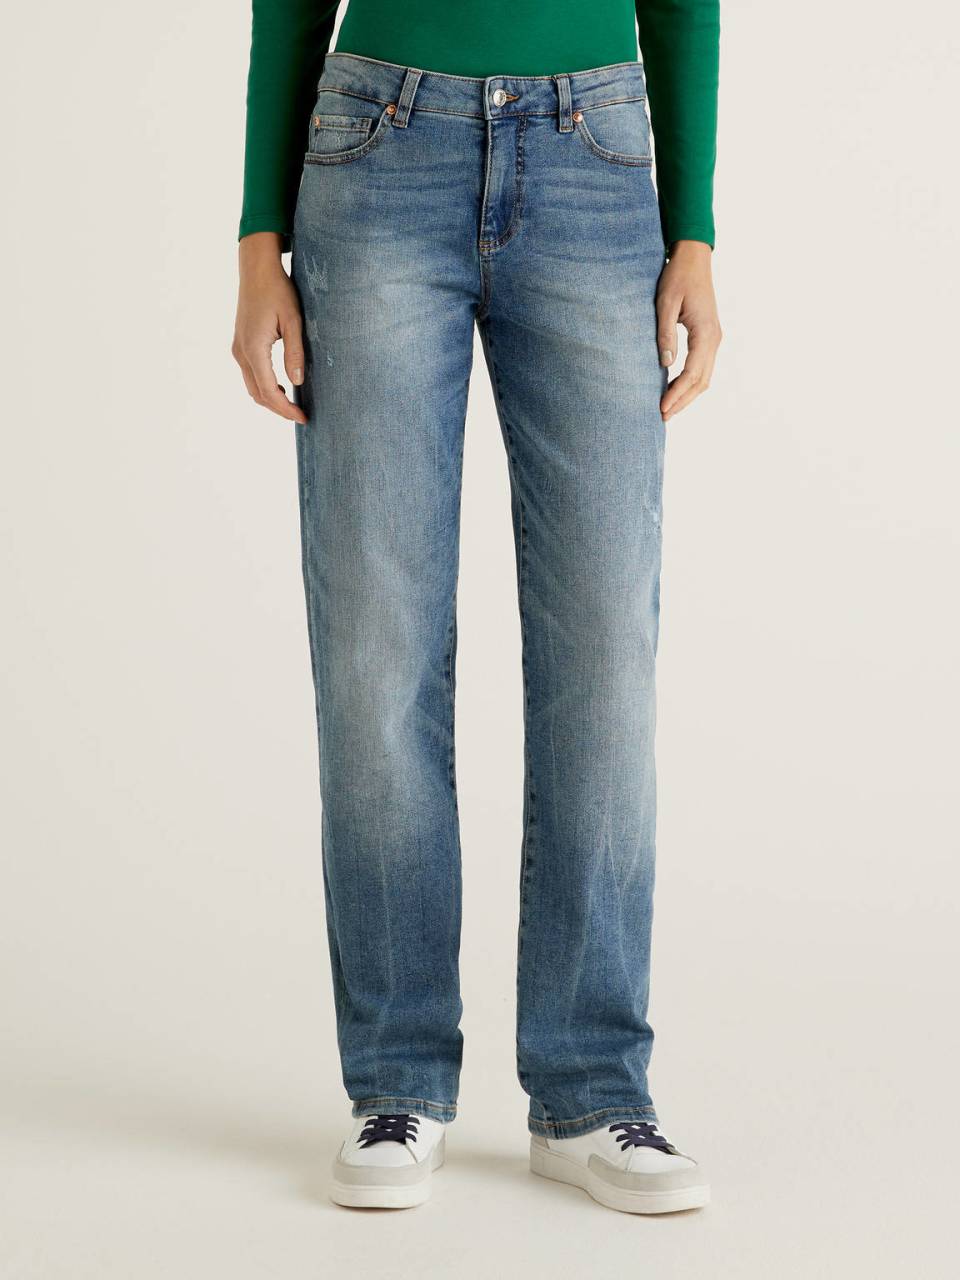 Benetton Slim fit straight leg jeans. 1